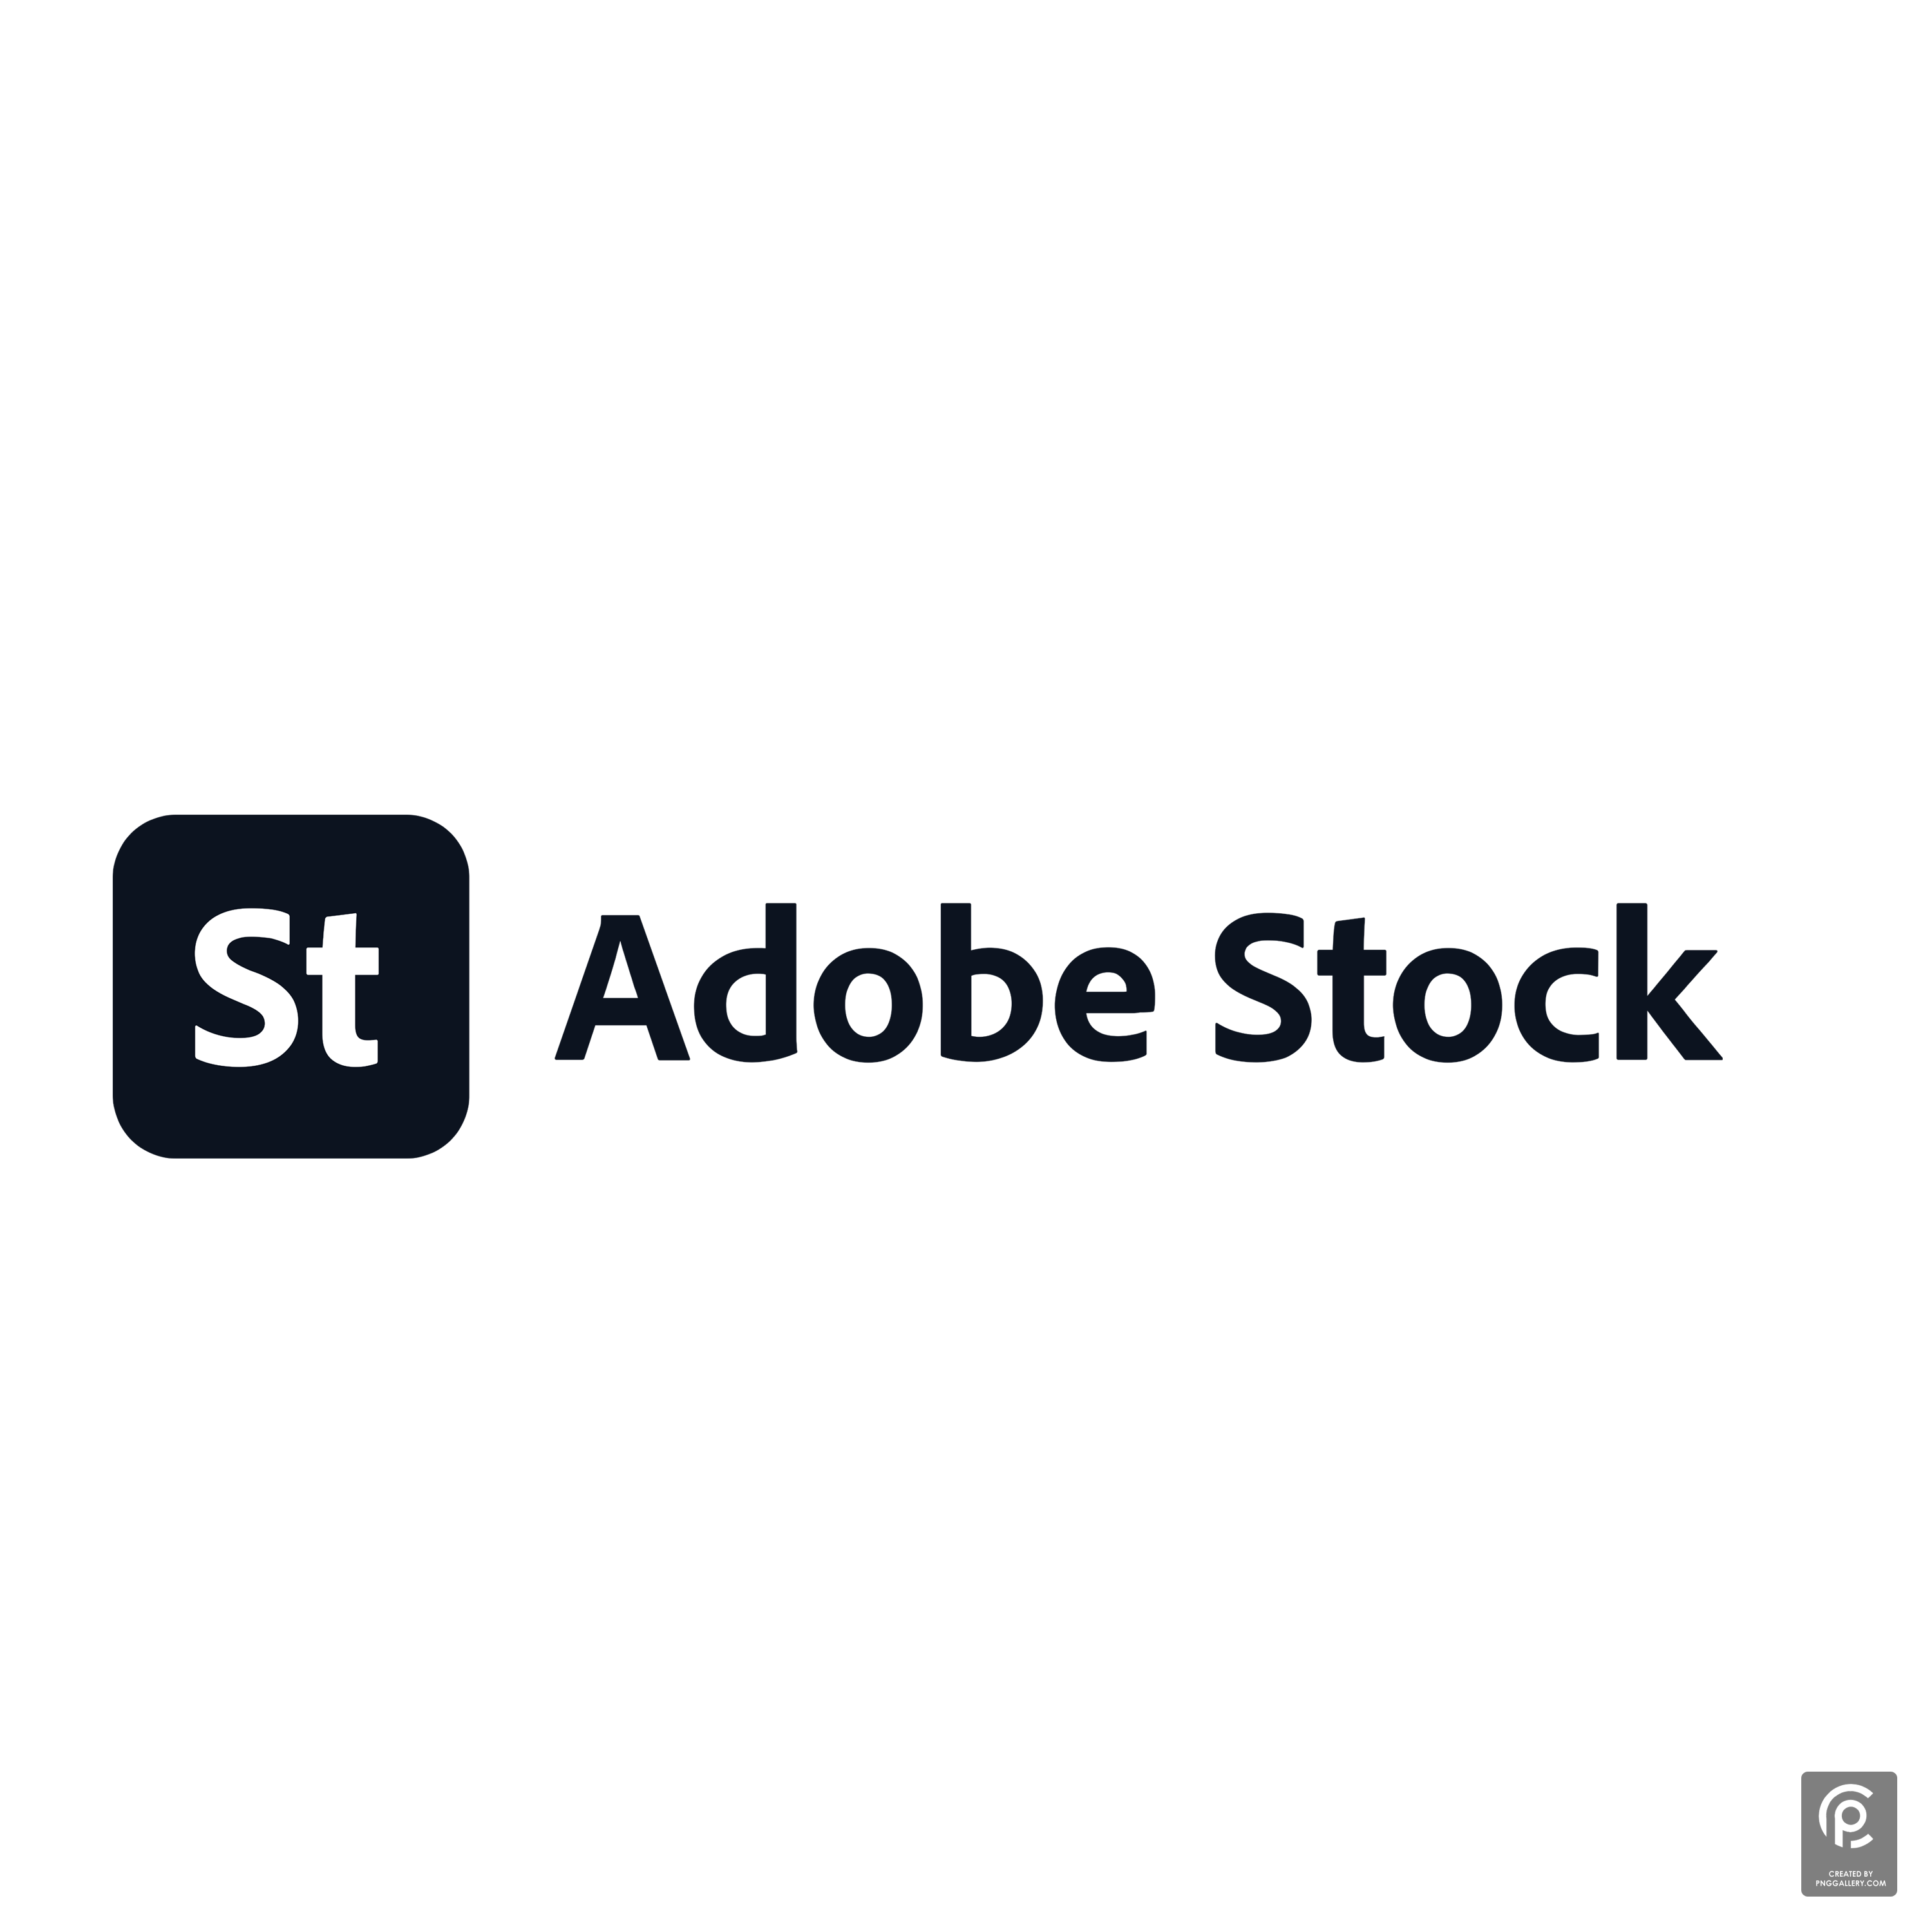 Adobe Stock logo 2020 Transparent Clipart